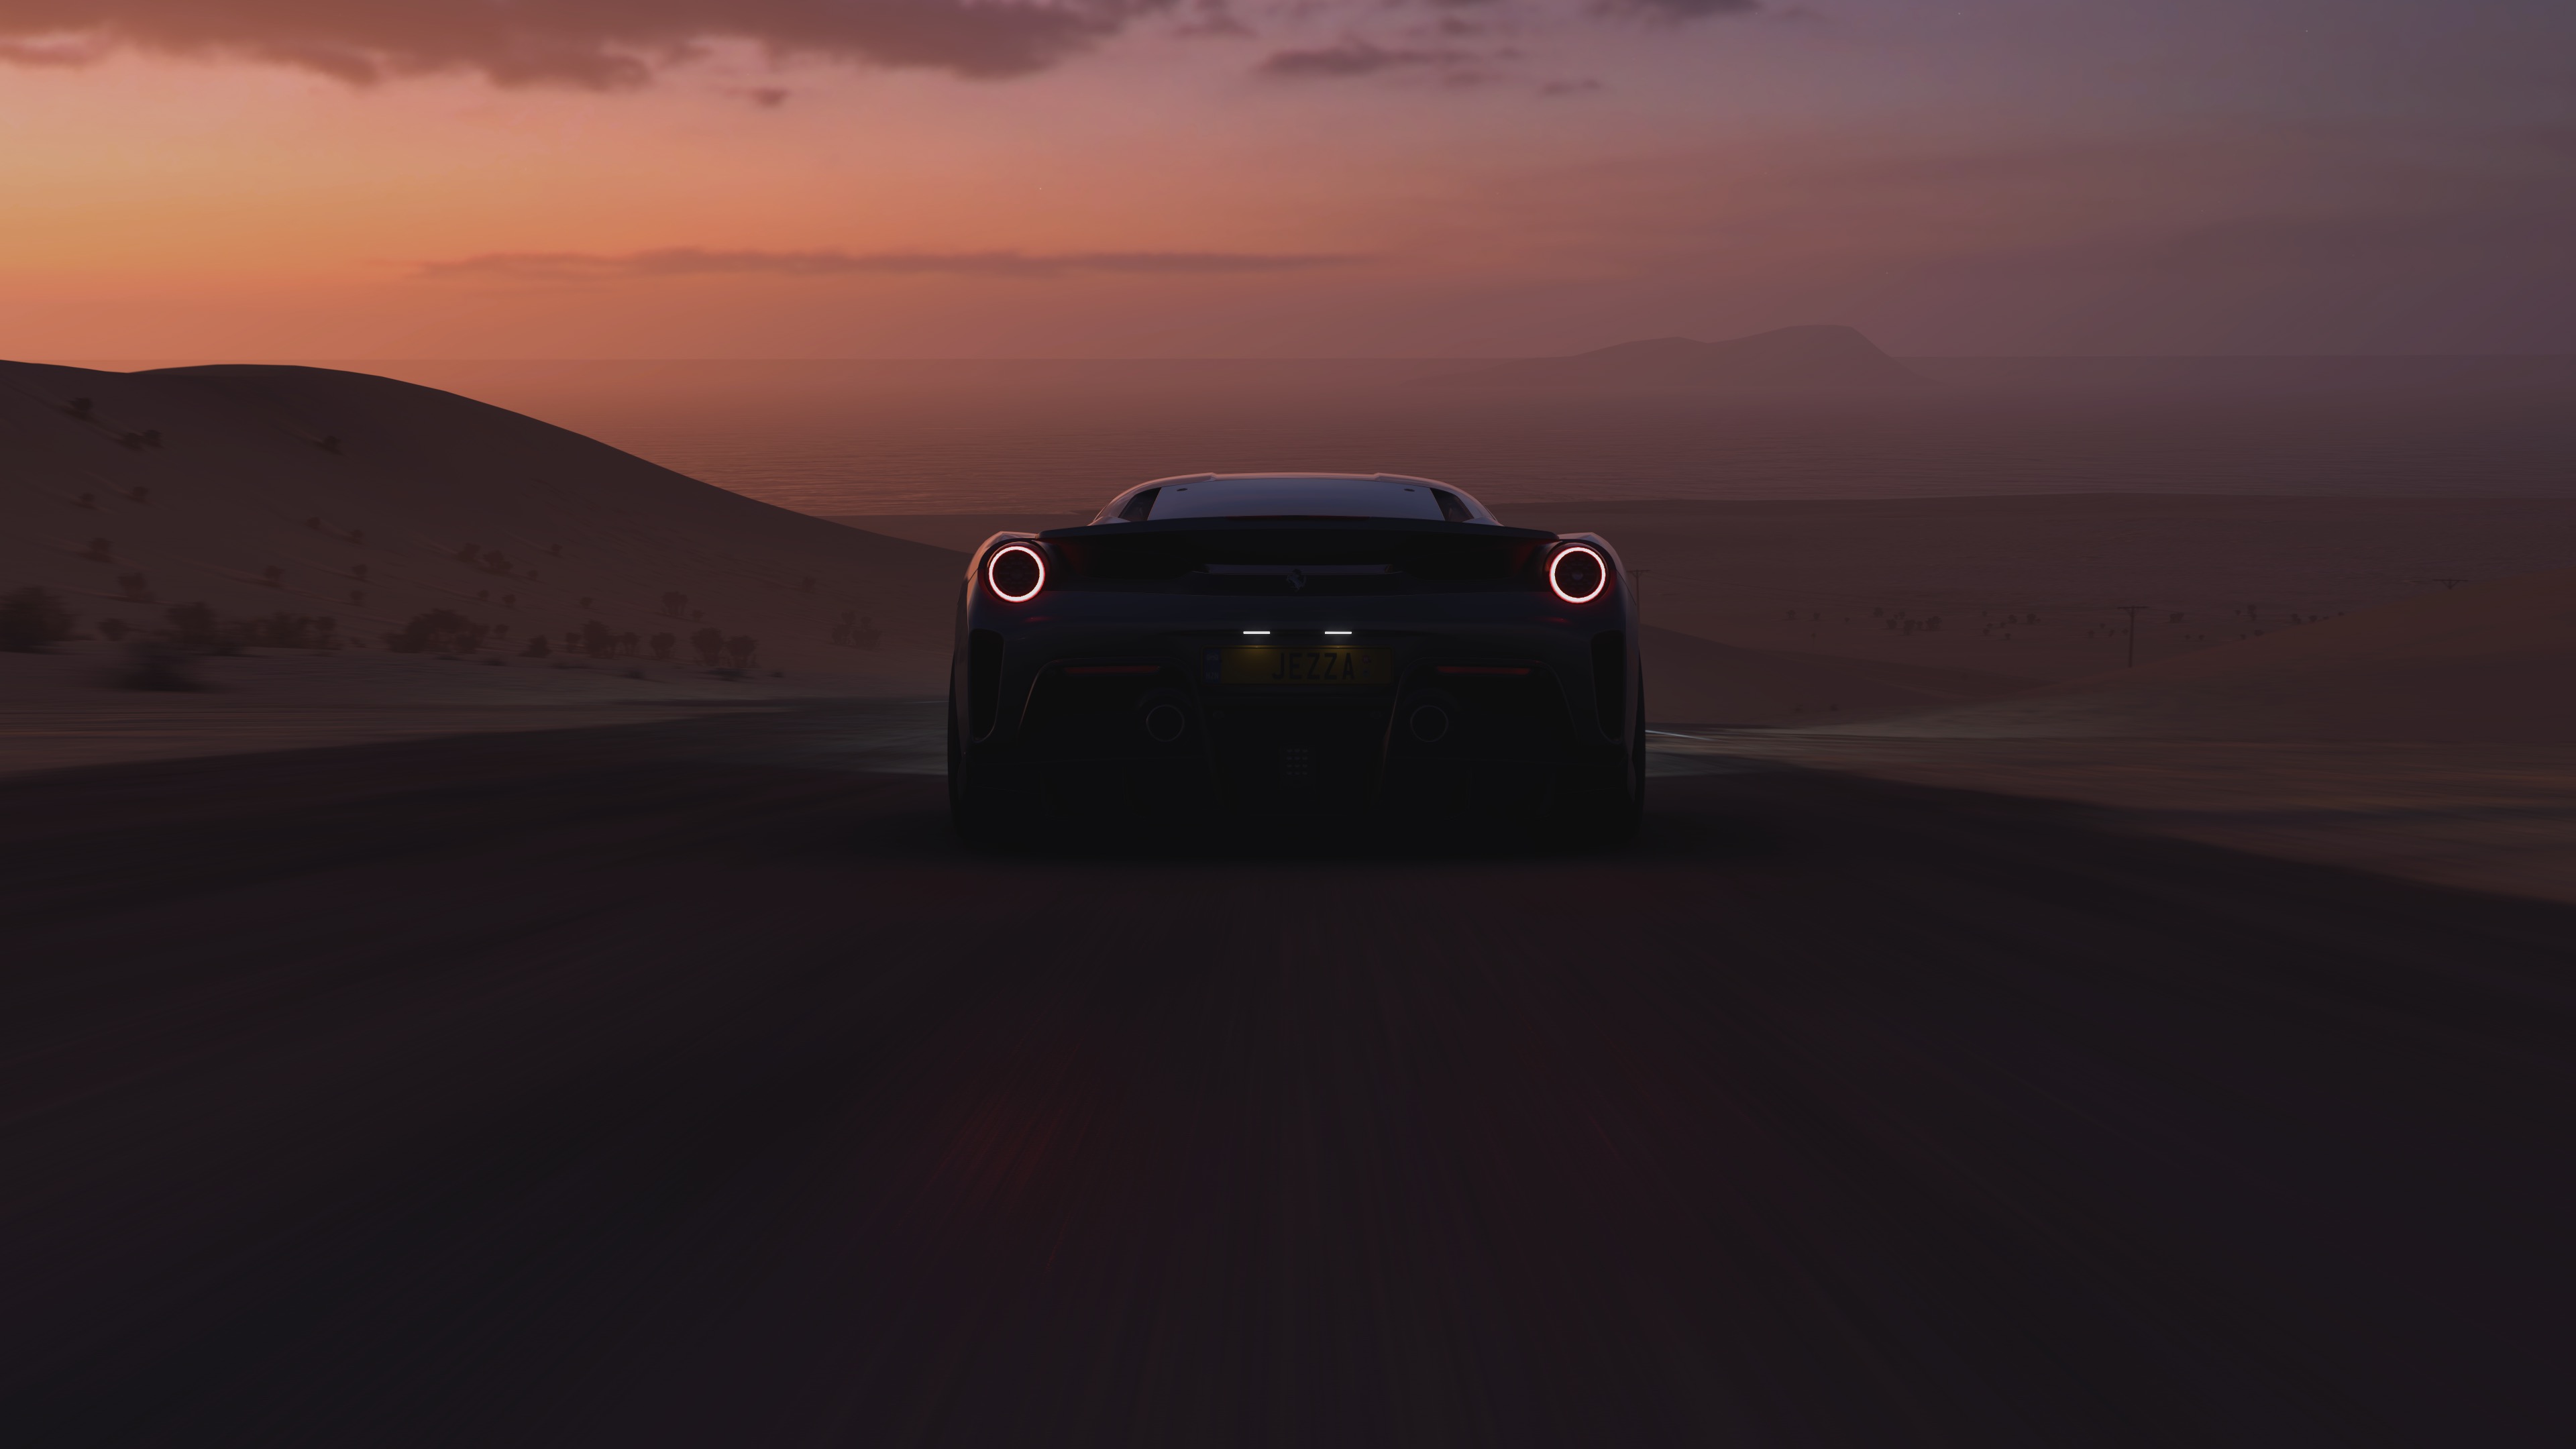 Ferrari 488 Supercars Forza Horizon 5 Car Rear View Clouds Sky Video Games Sunset Glow 3840x2160